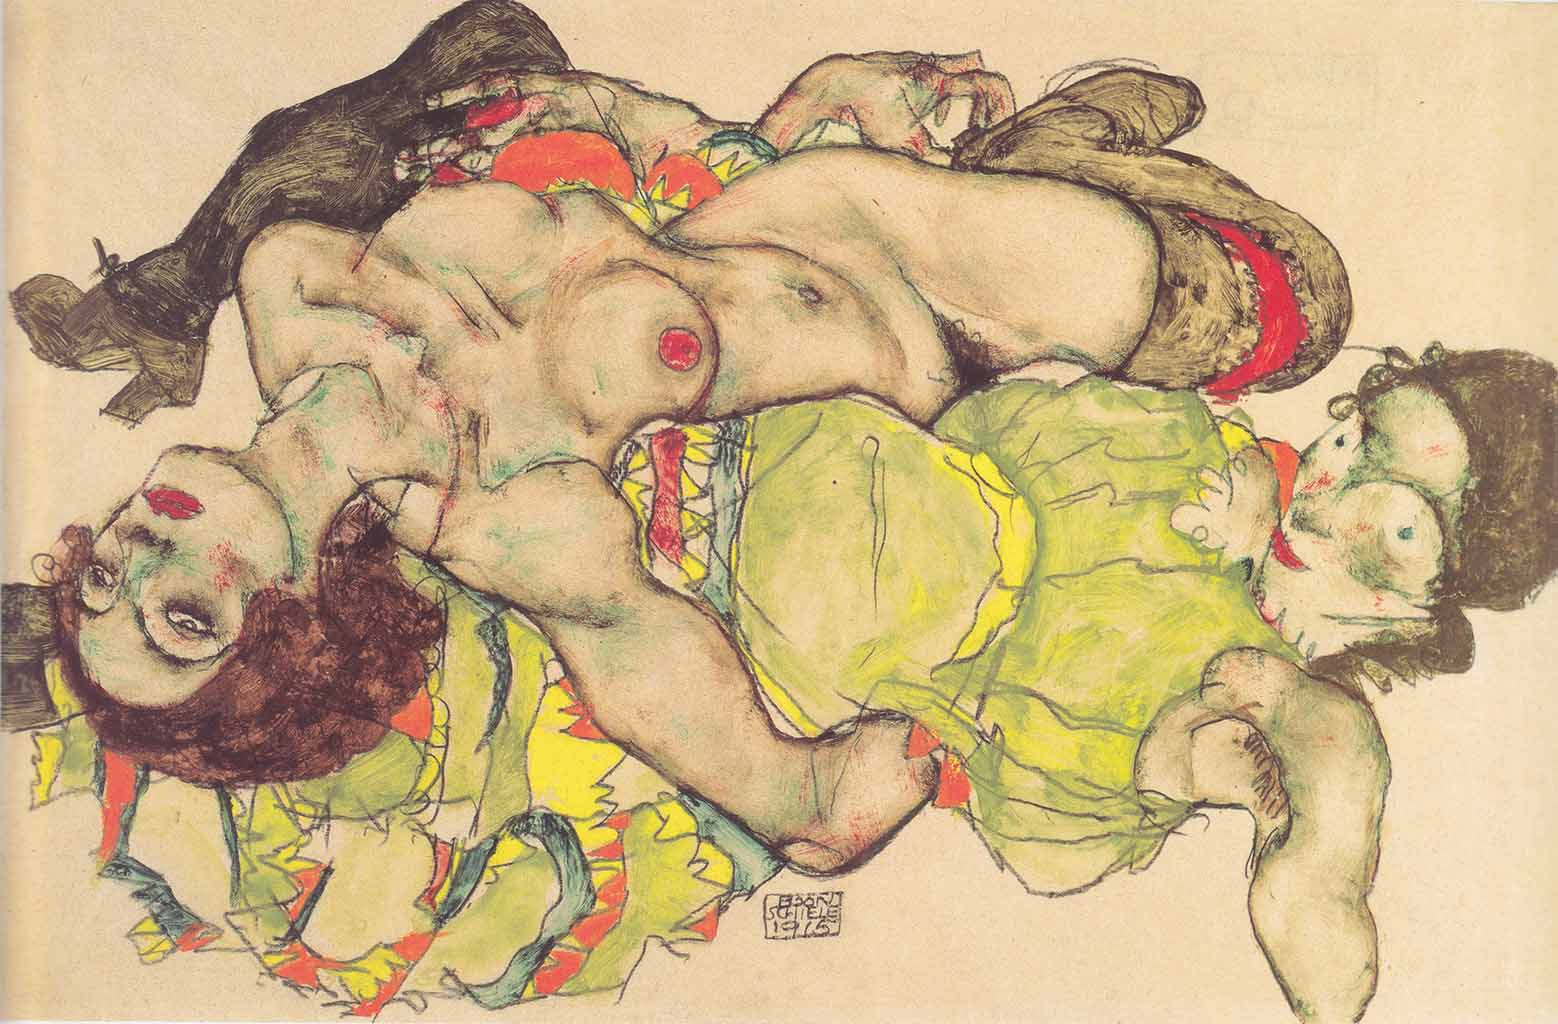 Эгон Шиле (Egon Schiele), “Weibliches Liebespaar“